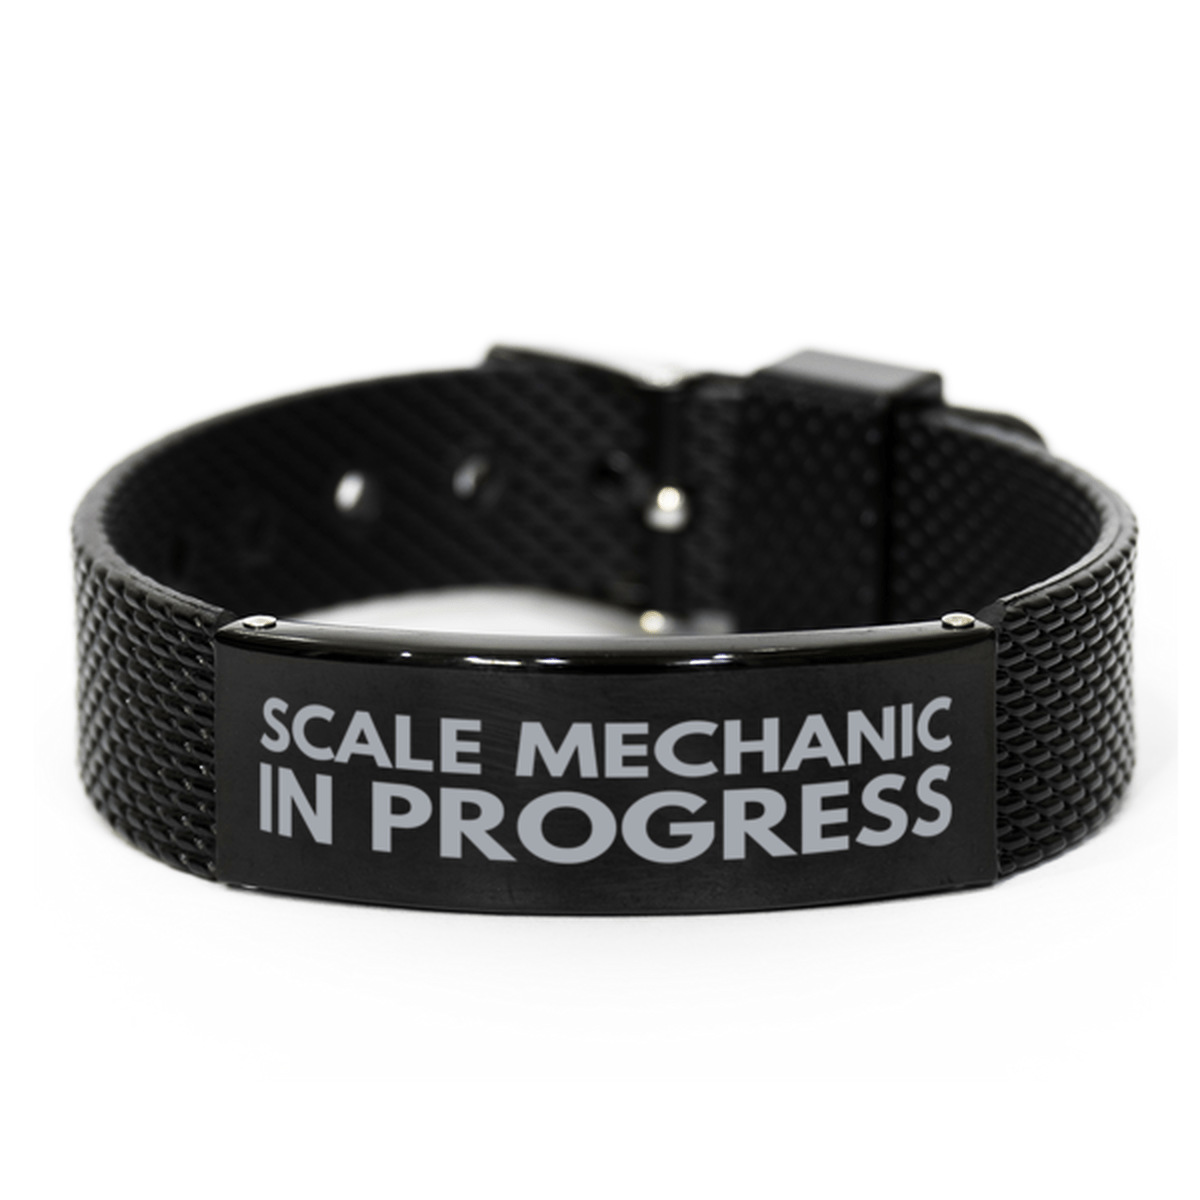 Inspirational Scale Mechanic Black Shark Mesh Bracelet, Scale Mechanic In Progress, Best Graduation Gifts for Students